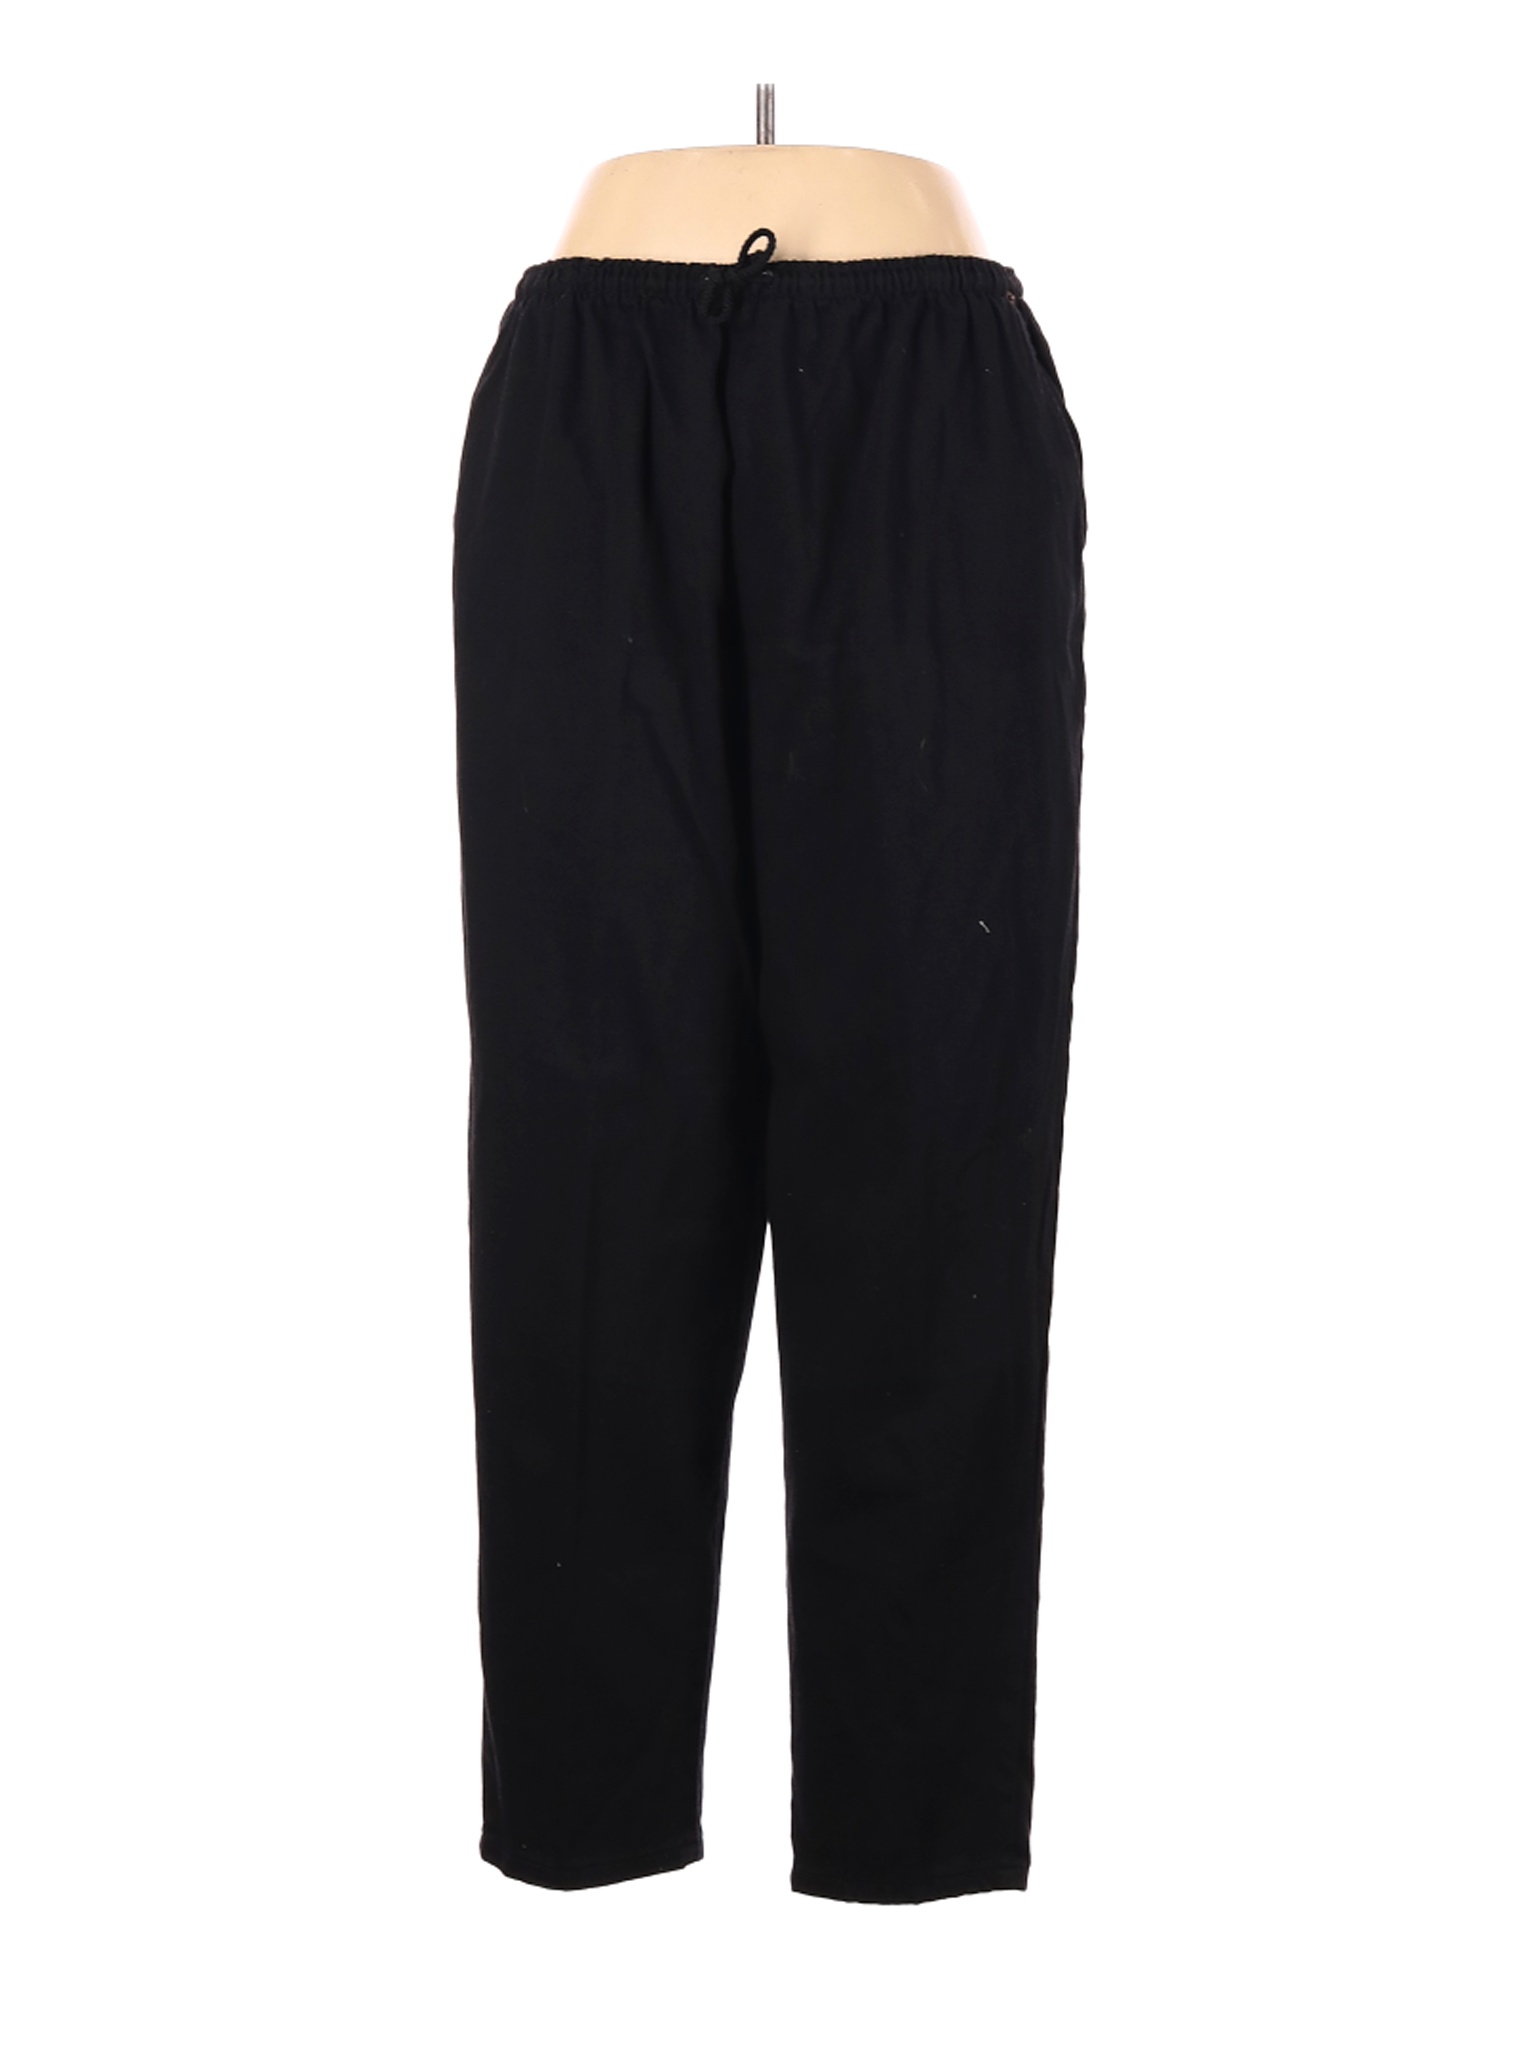 Bobbie Brooks Women Black Casual Pants 20 Plus | eBay